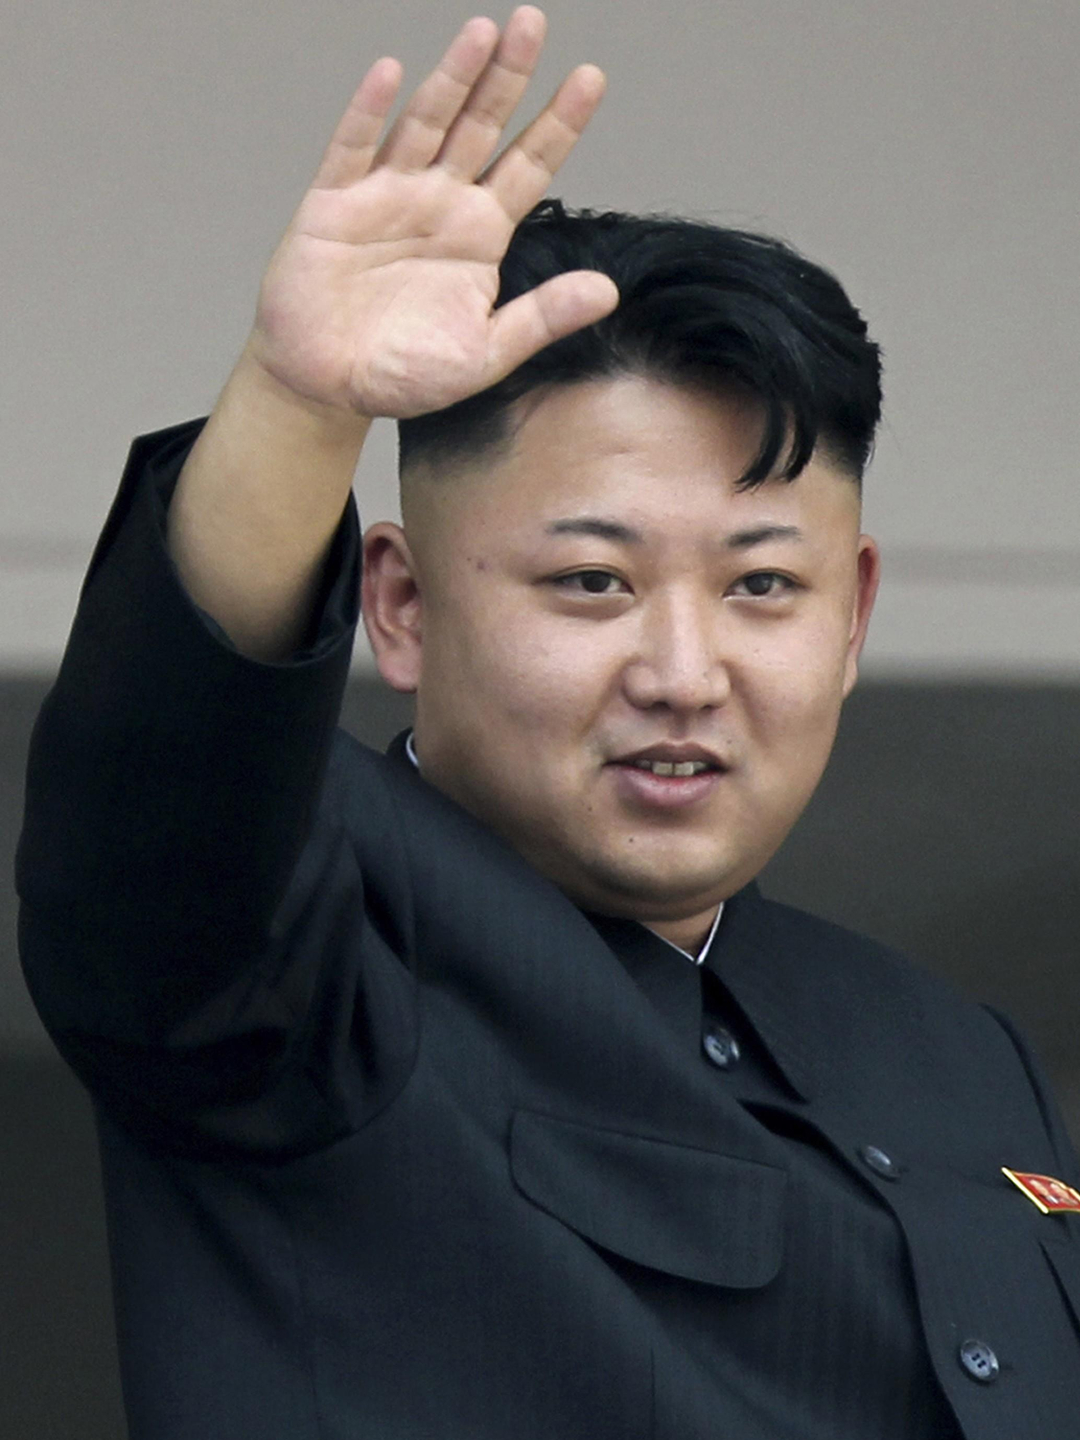 Kim Jong-un appearance